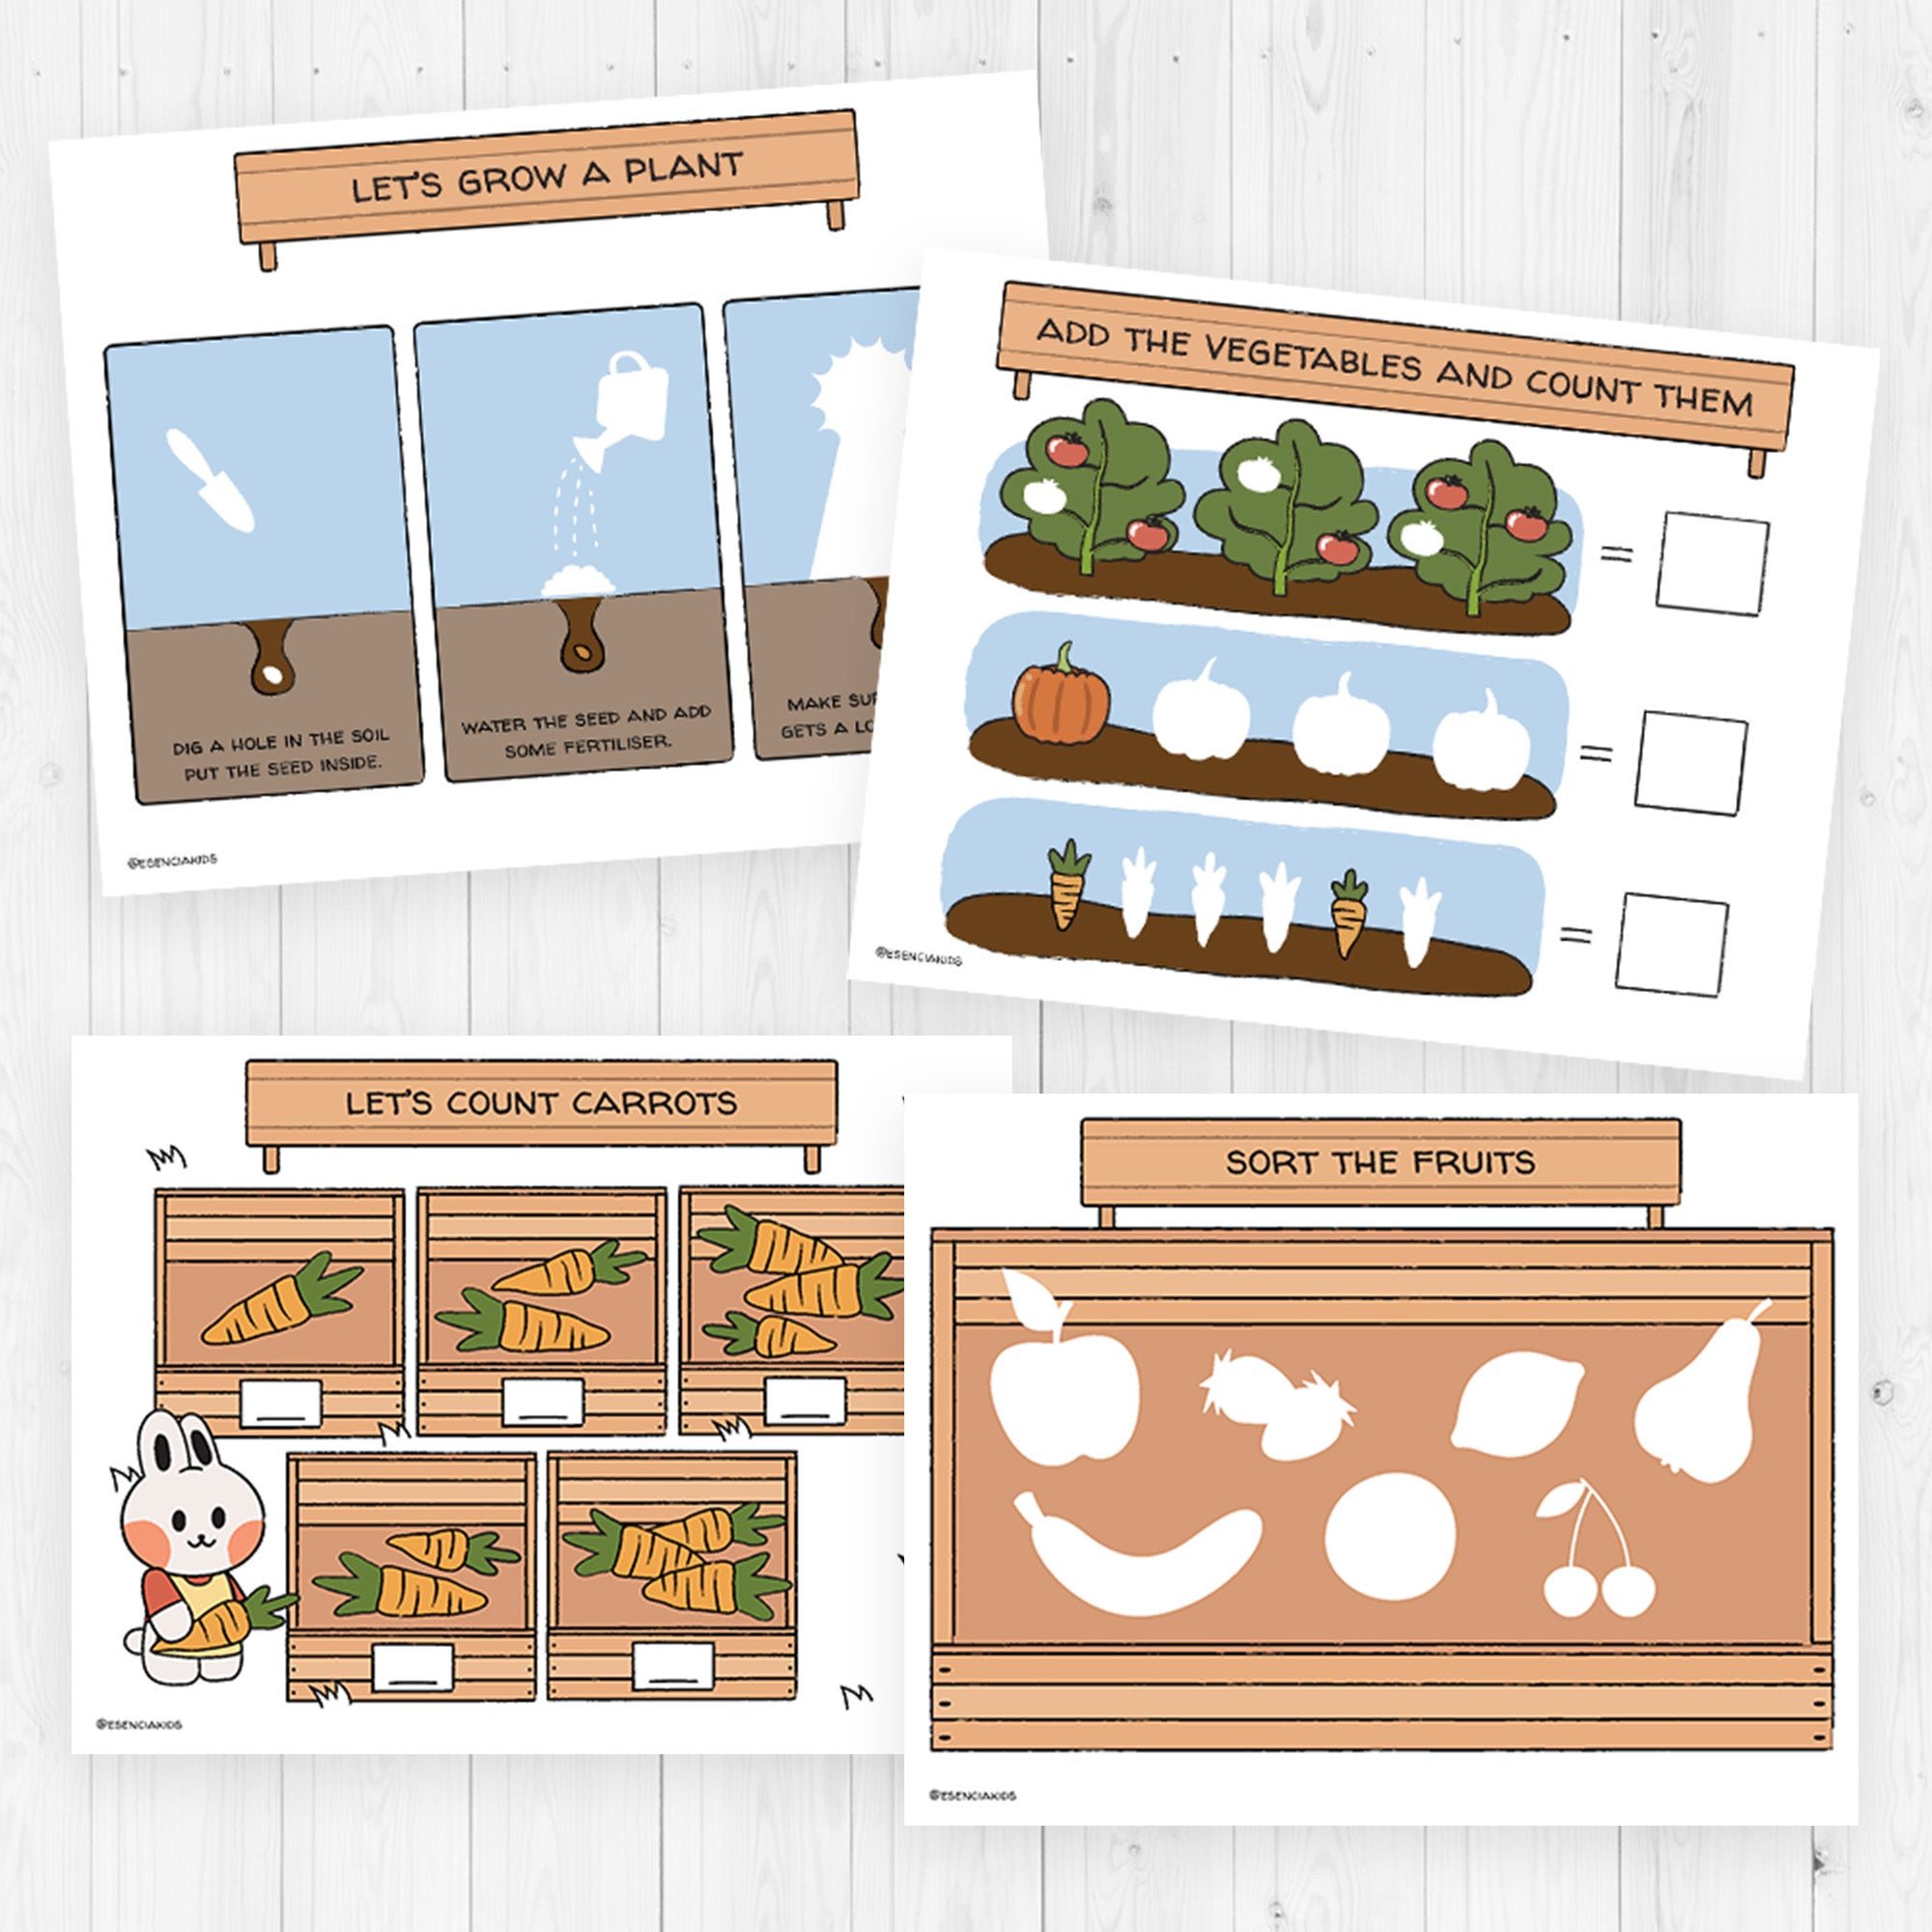 Farm Animals Busy Book | Preschool Toddler Busy Books, preschool printable activity book, Montessori learning